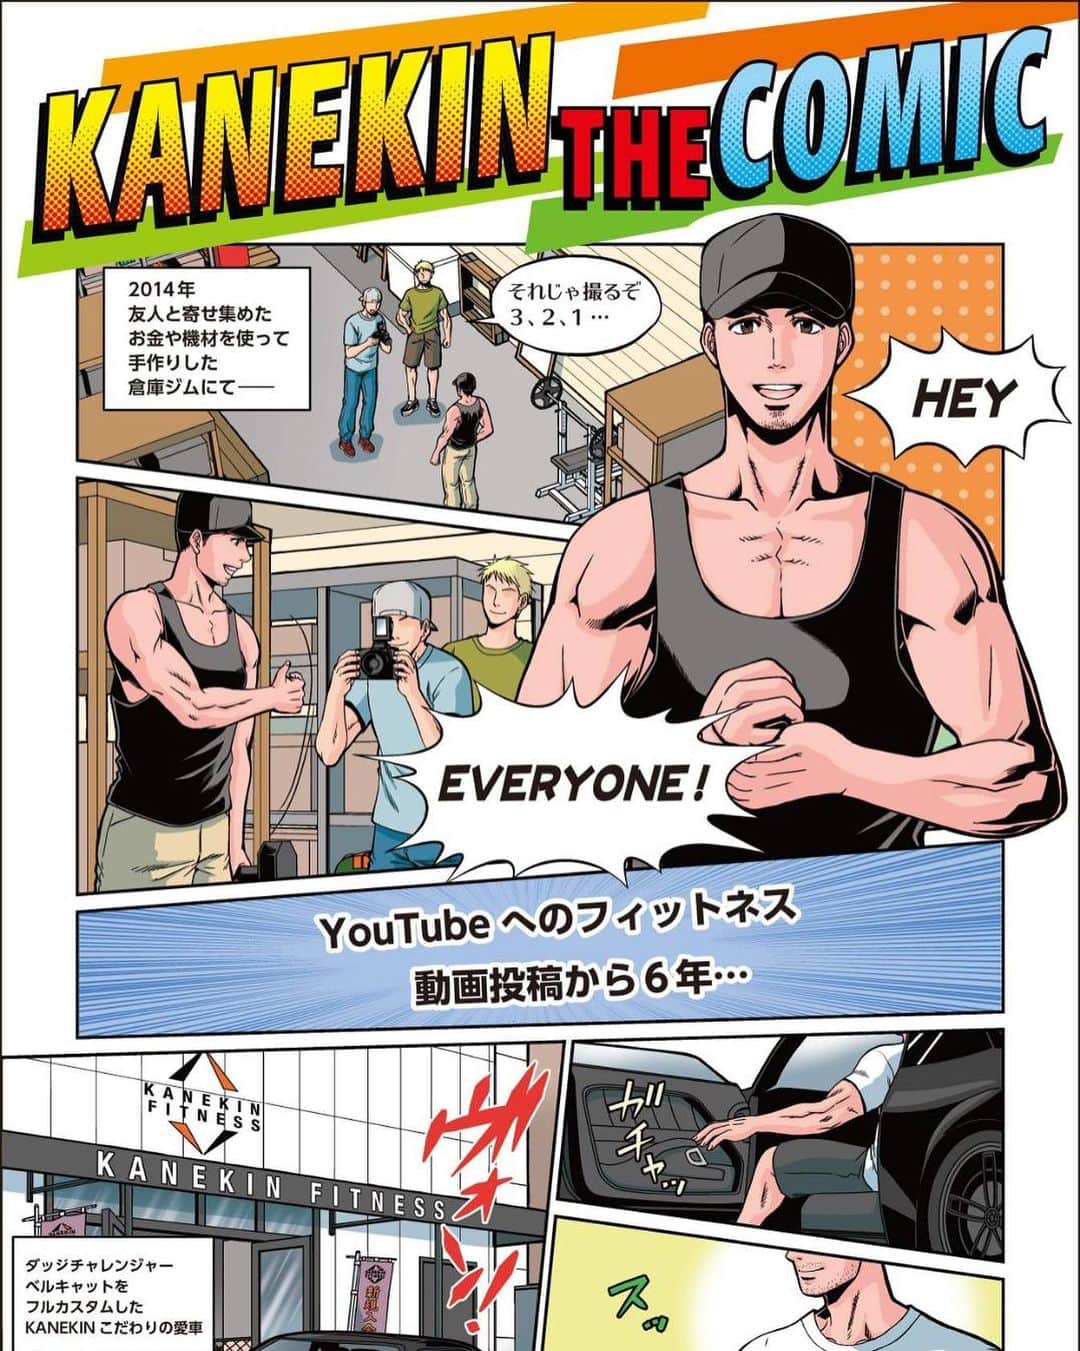 Kanekin Fitnessのインスタグラム